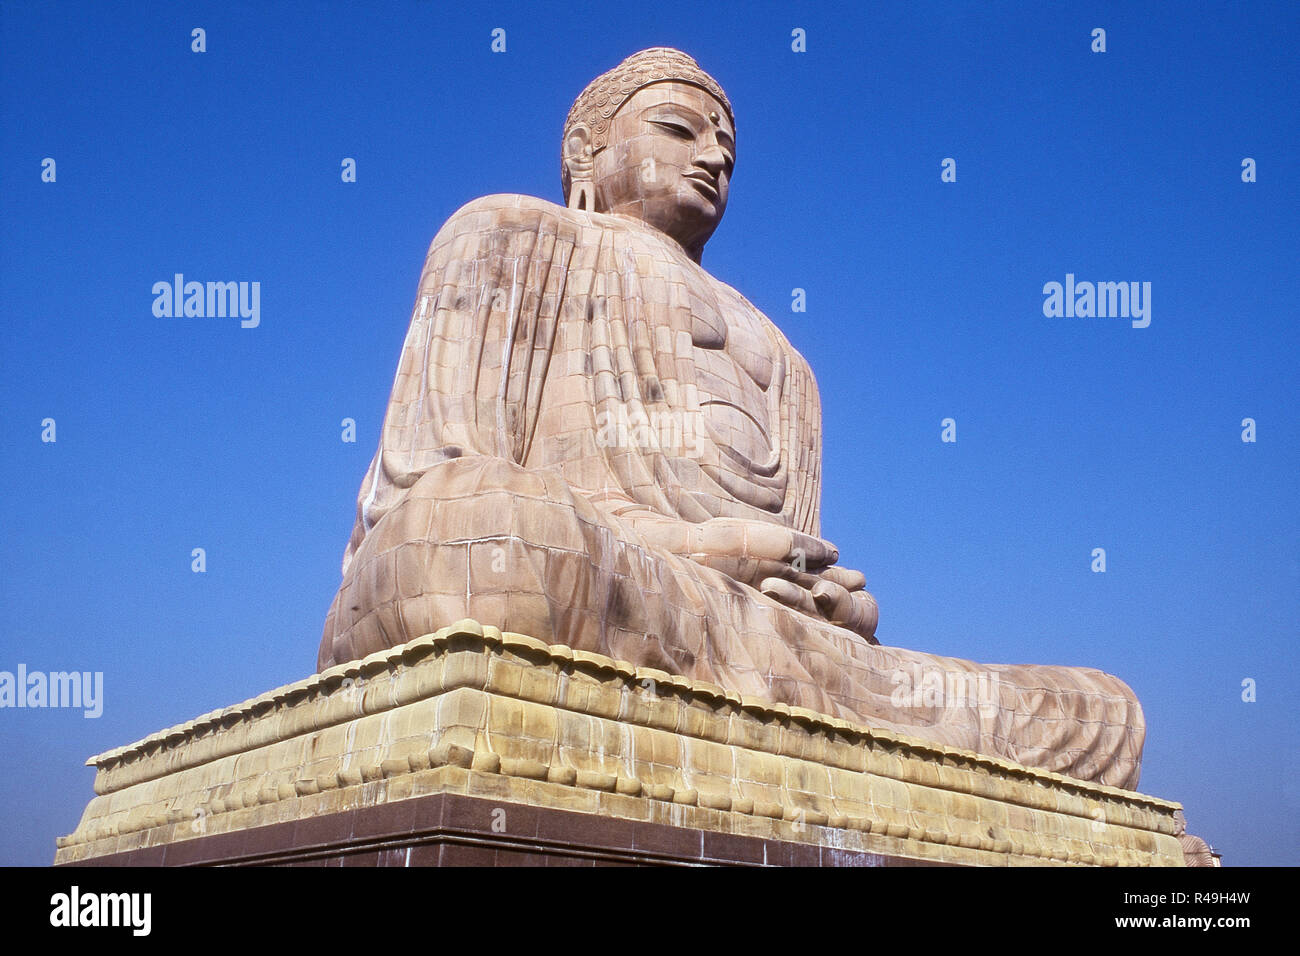 Der große Buddha Statue in Bodh Gaya, Bihar, Indien, Asien Stockfoto